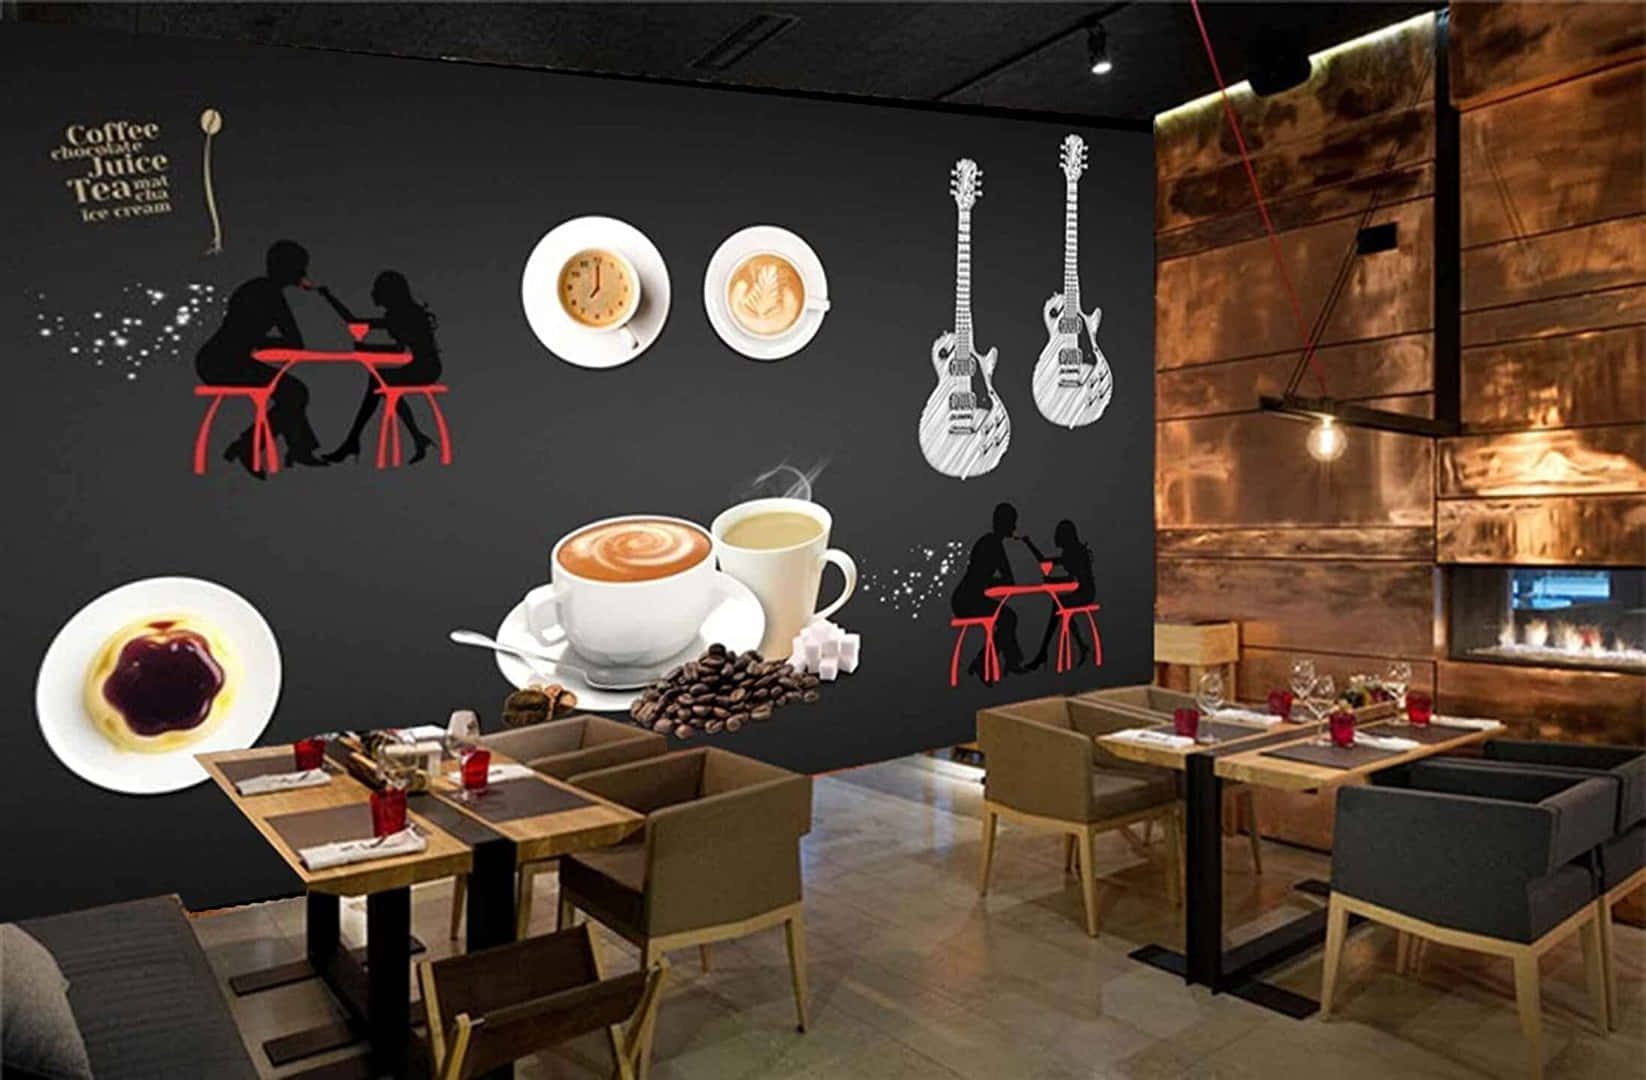 Wall decor applications for restaurants & bars - DesignWanted : DesignWanted